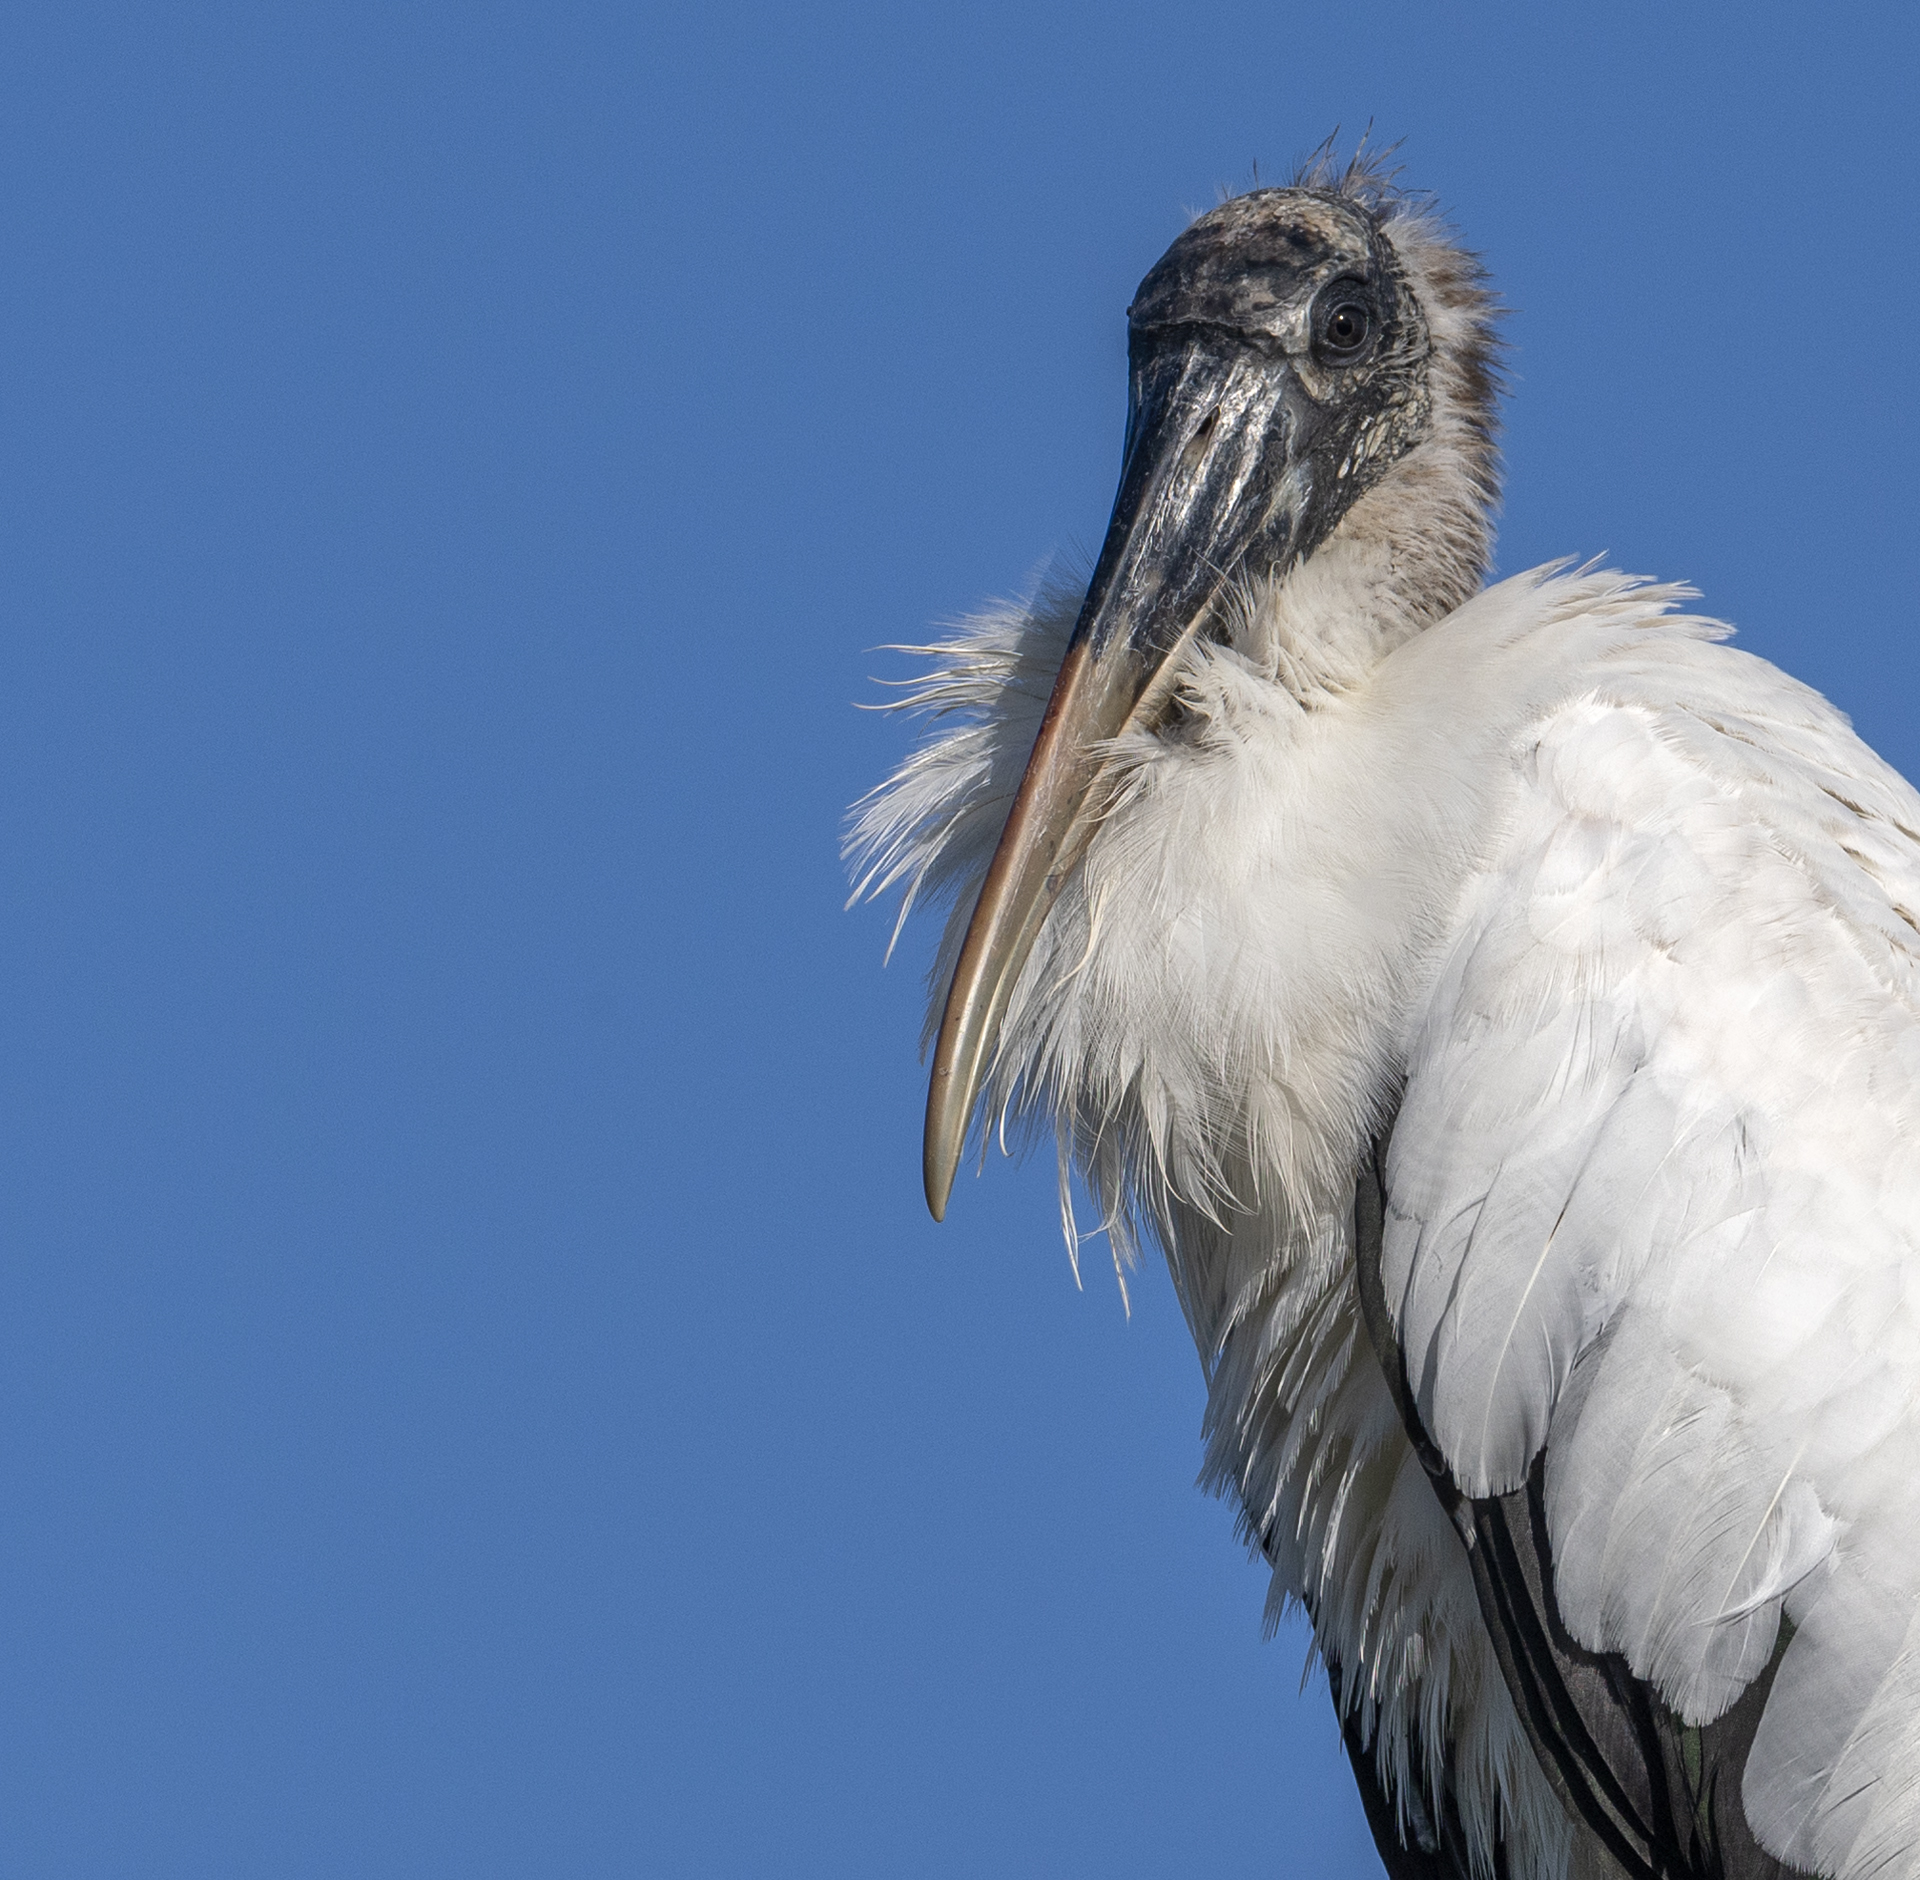 Ameriansk ibisstork Wood stork